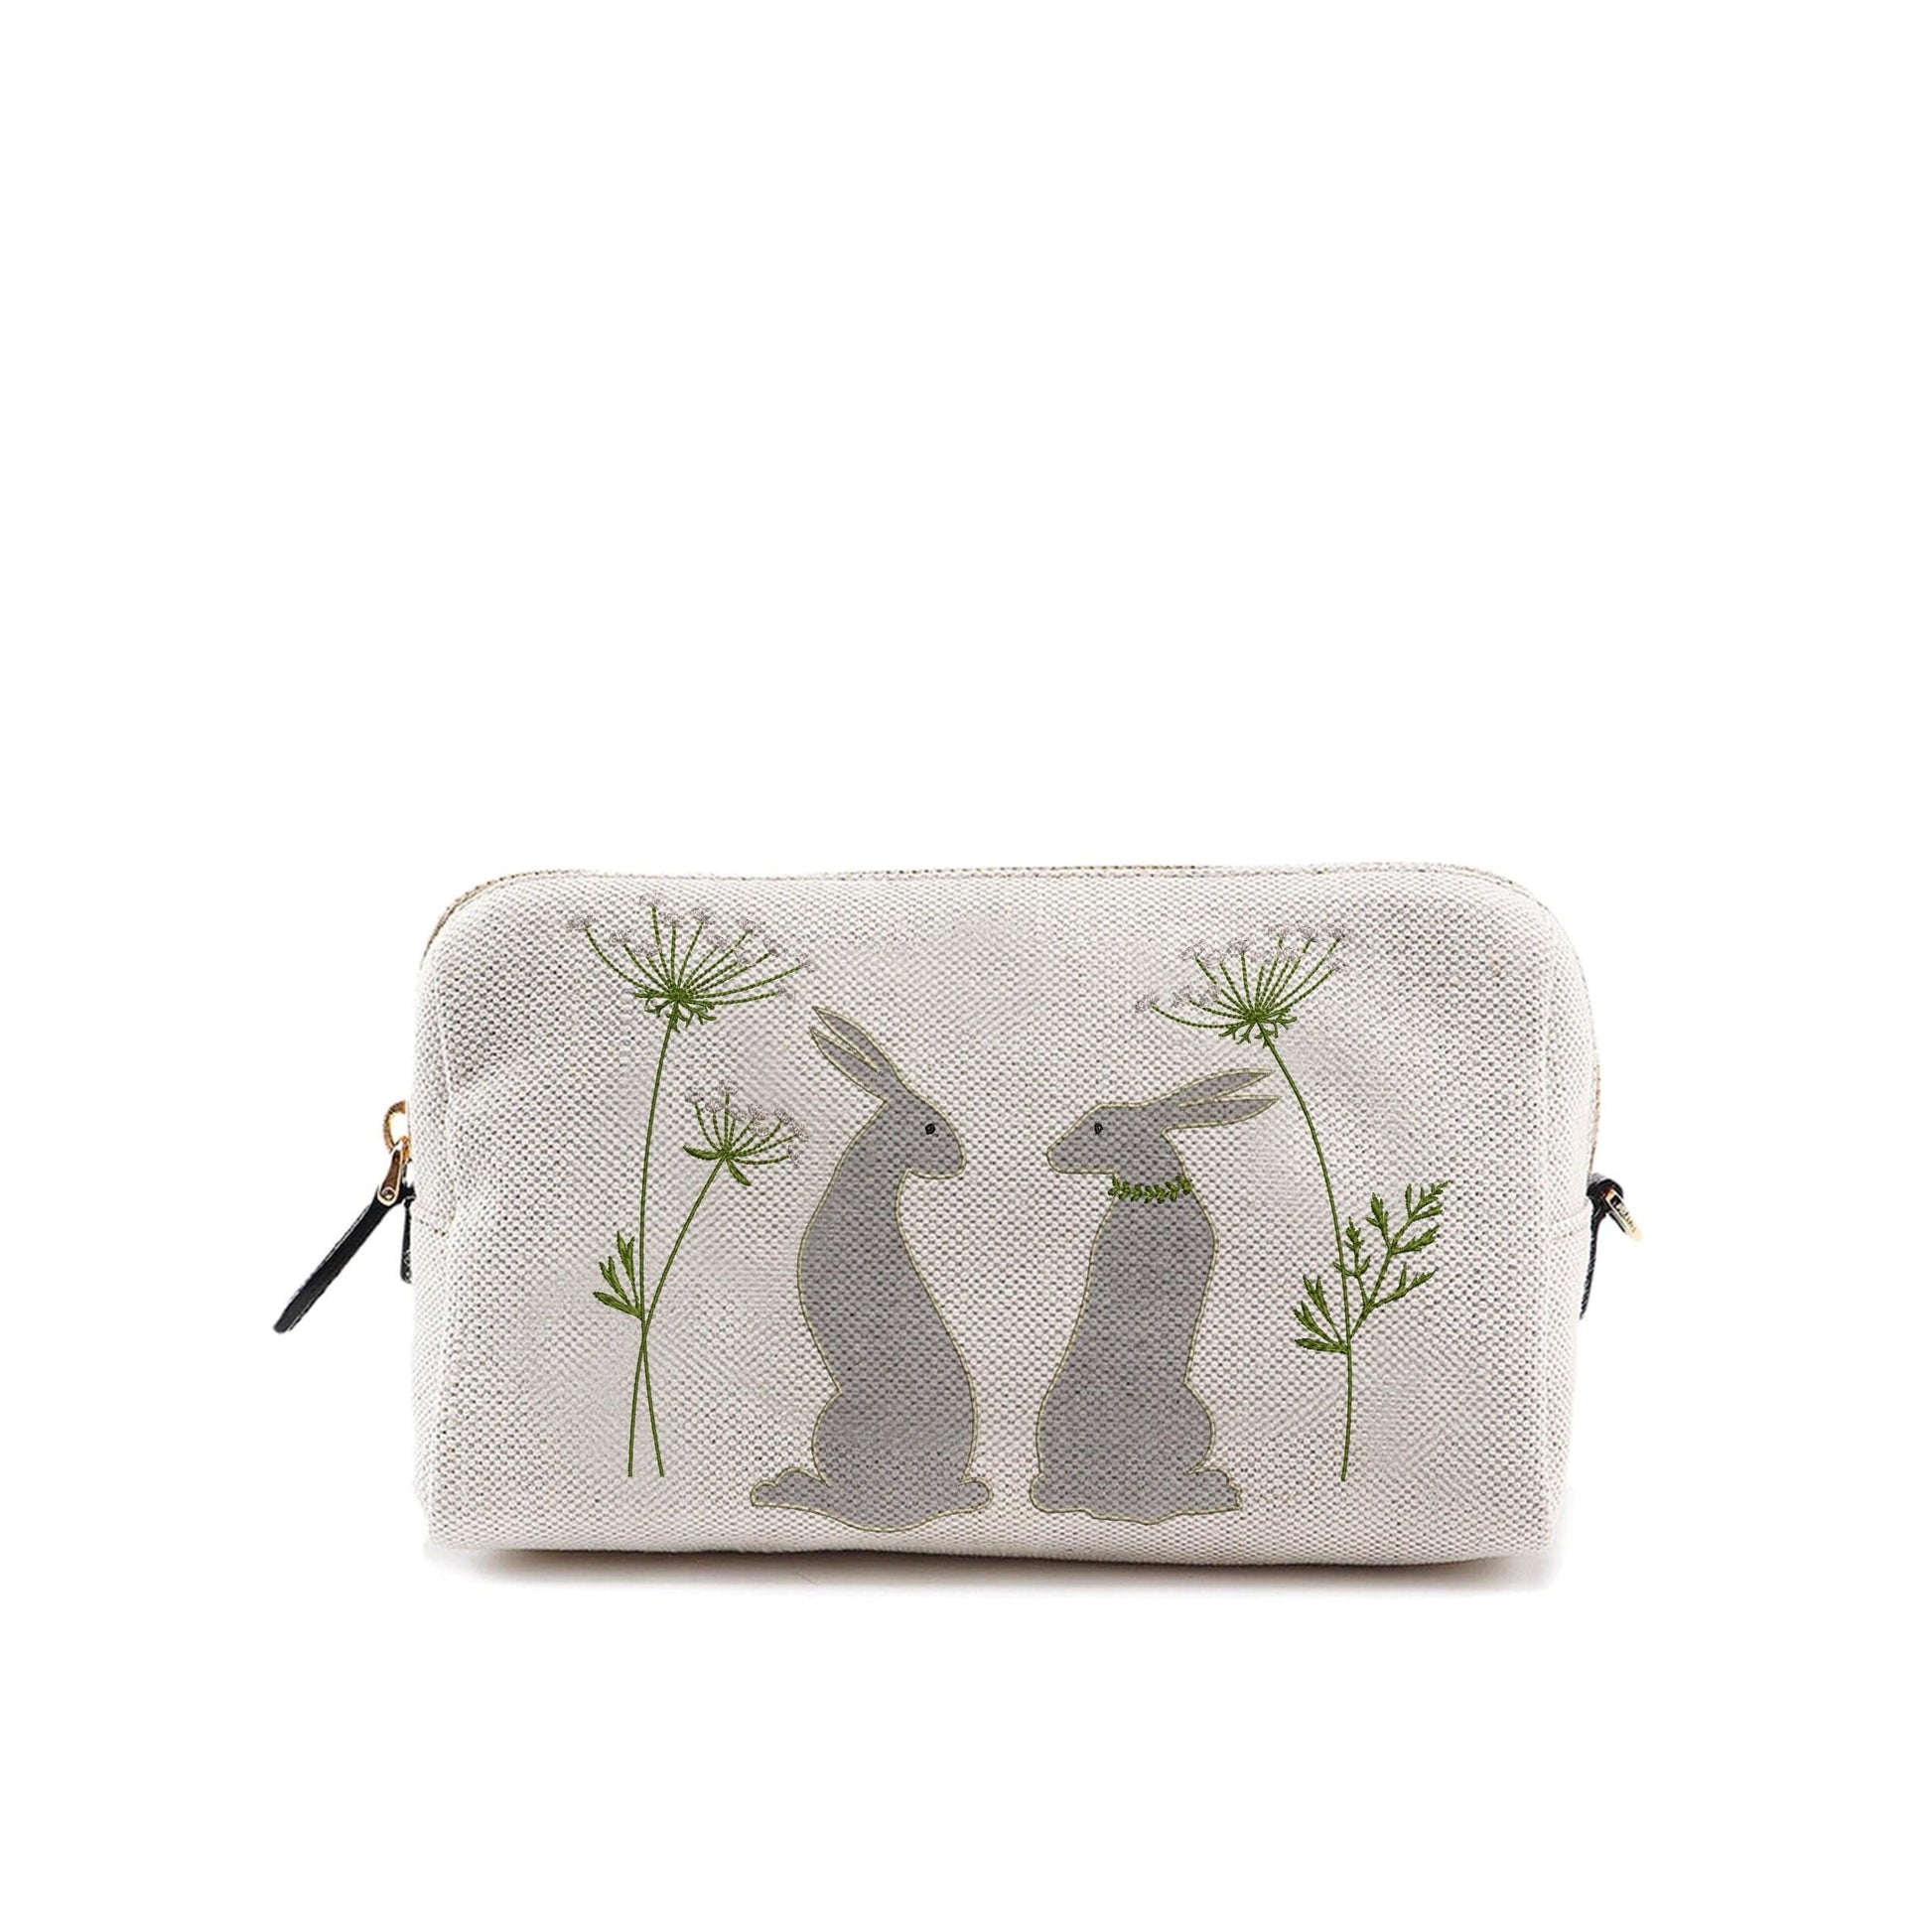 Rabbit Applique Machine Embroidery Design on pouch